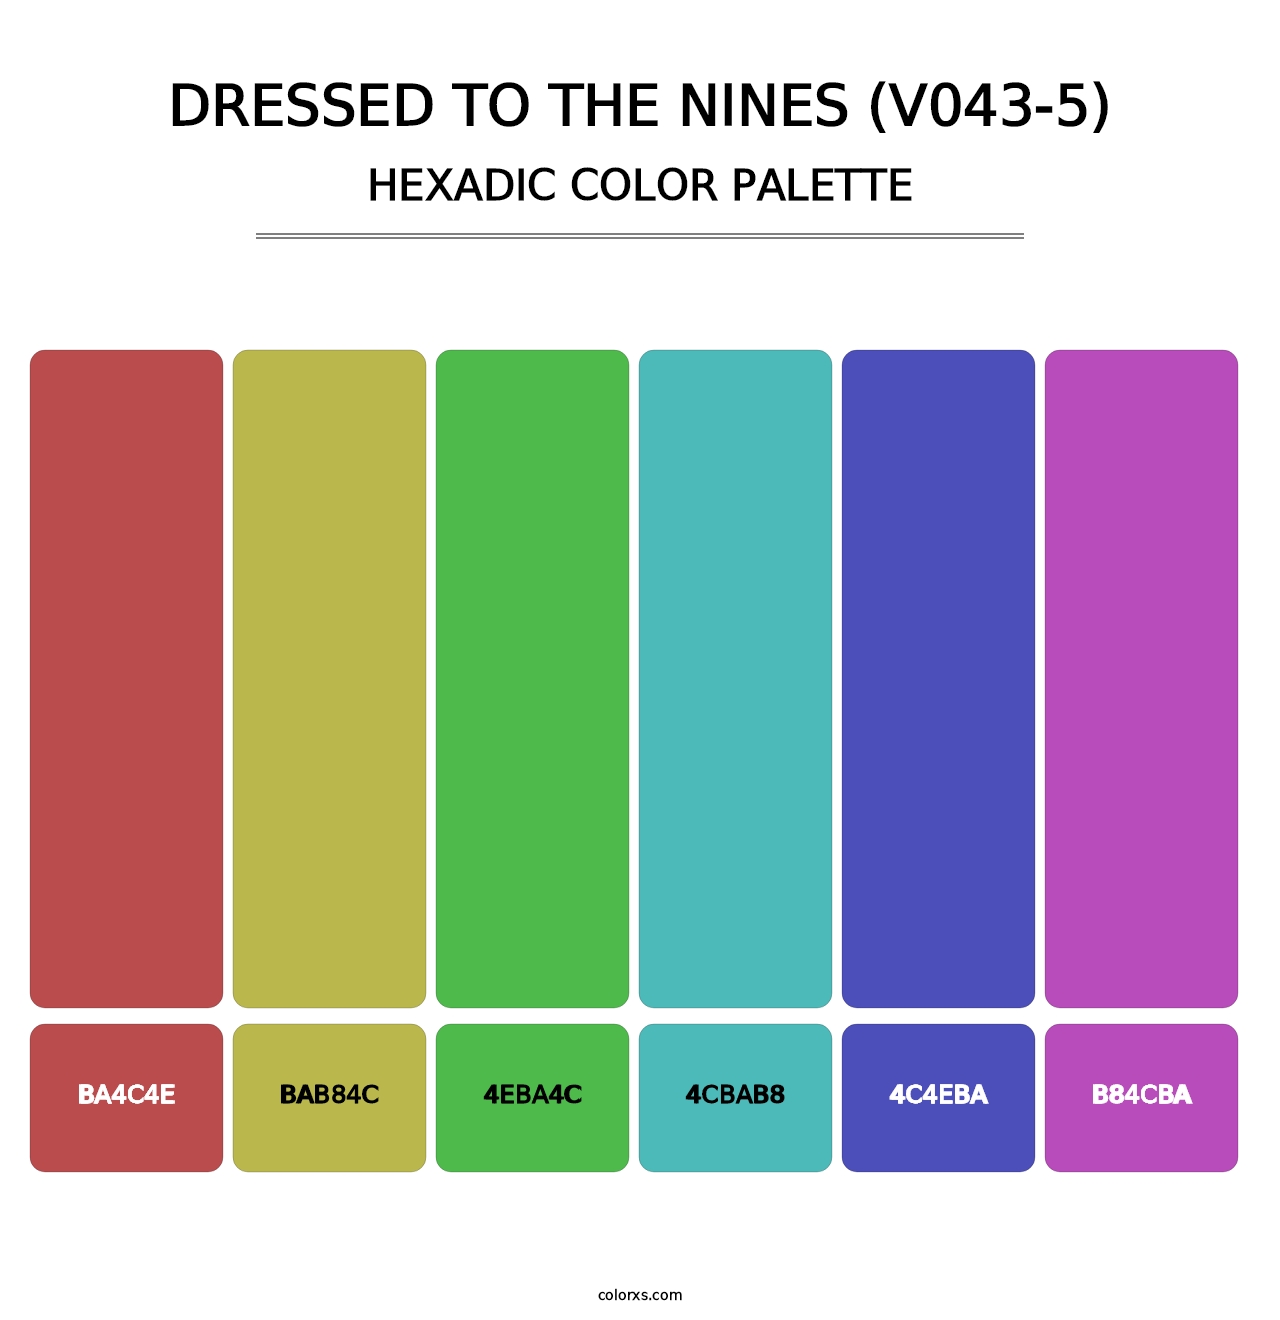 Dressed to the Nines (V043-5) - Hexadic Color Palette